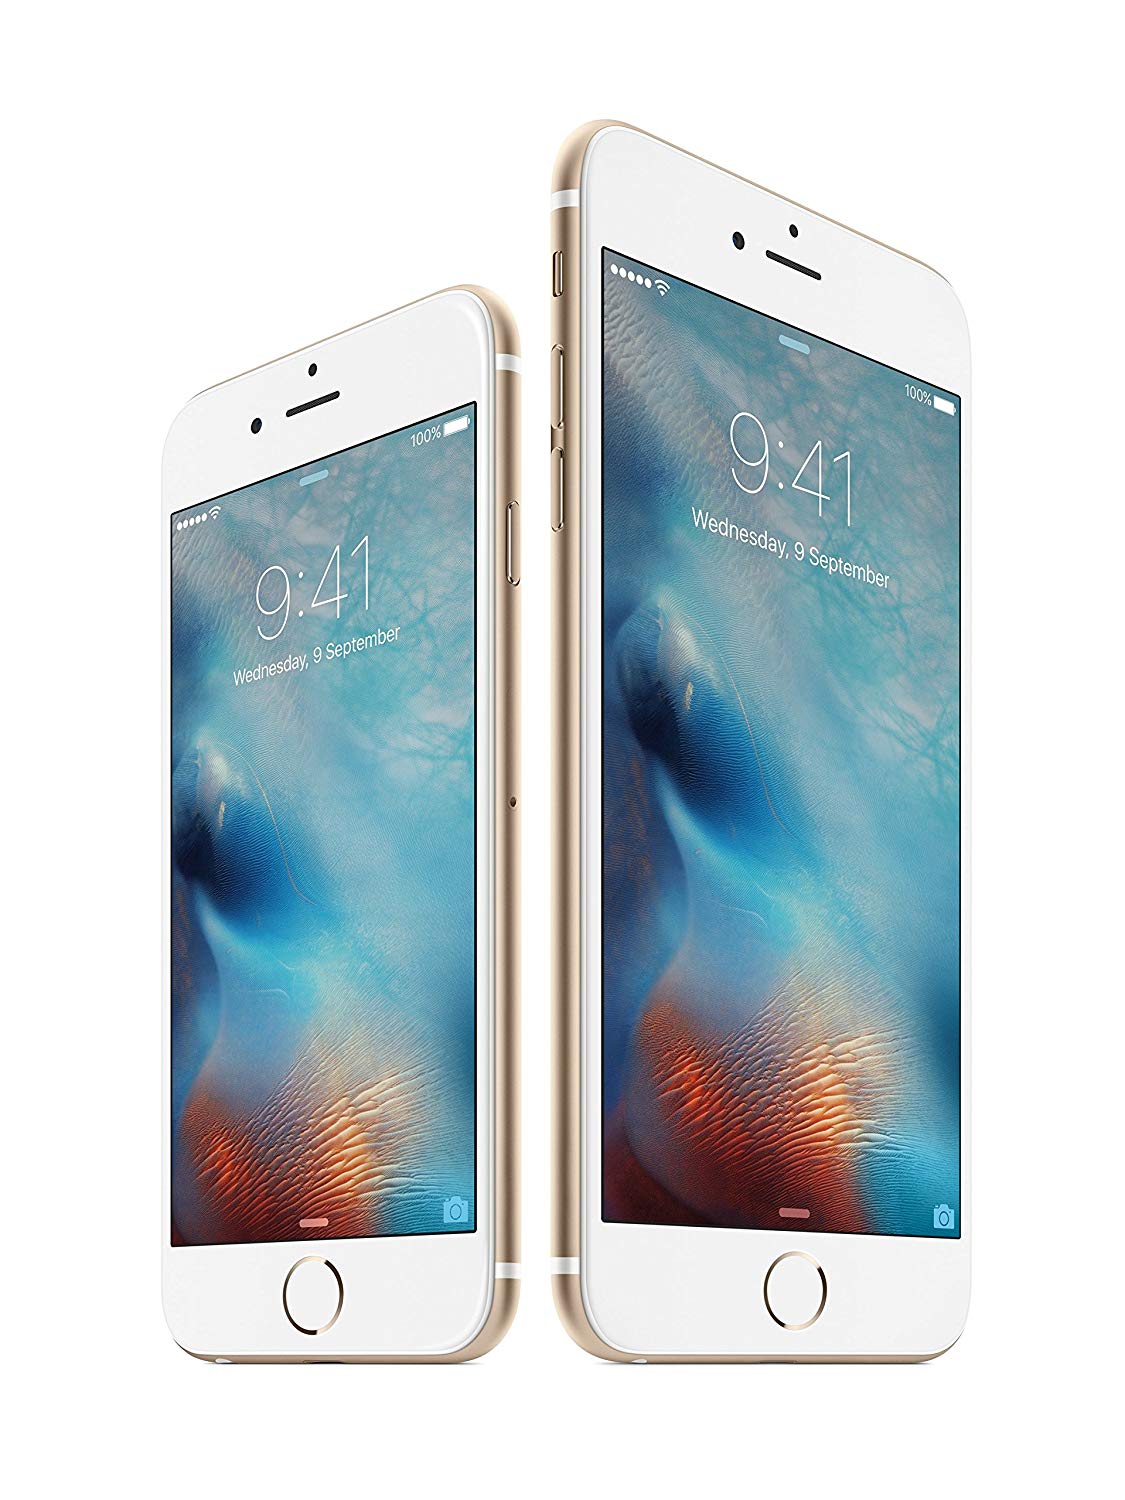 Apple iPhone 6S Plus 16GB (Space Gray) Factory Unlocked Smartphone